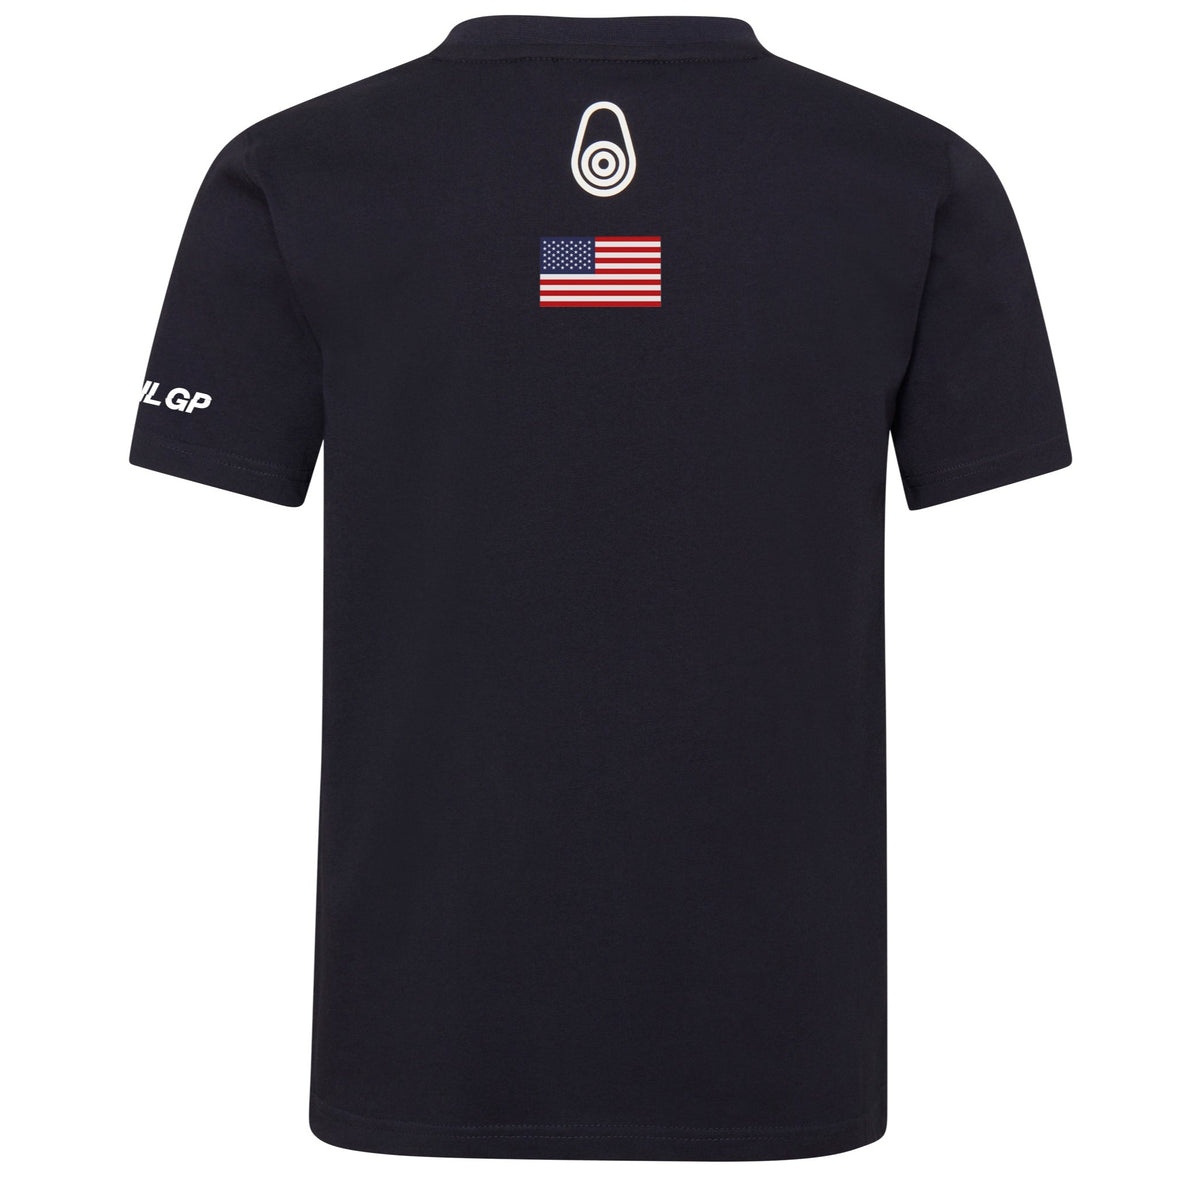 Team USA Youth Race Dark Navy T-Shirt